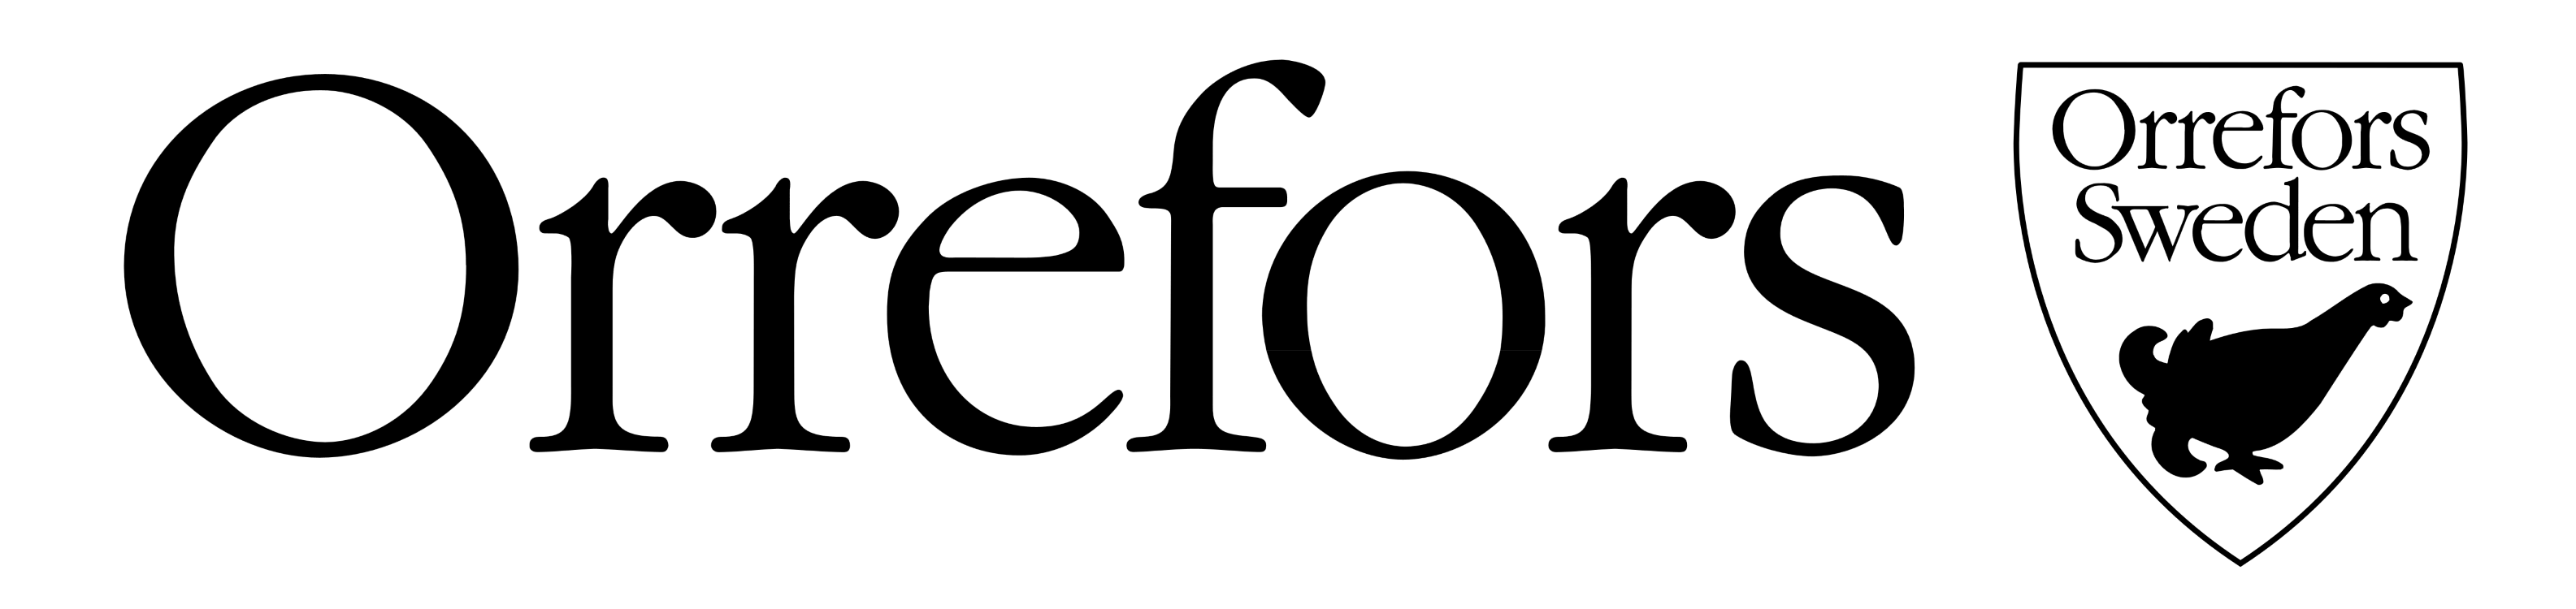 Orrefors logo, logotype